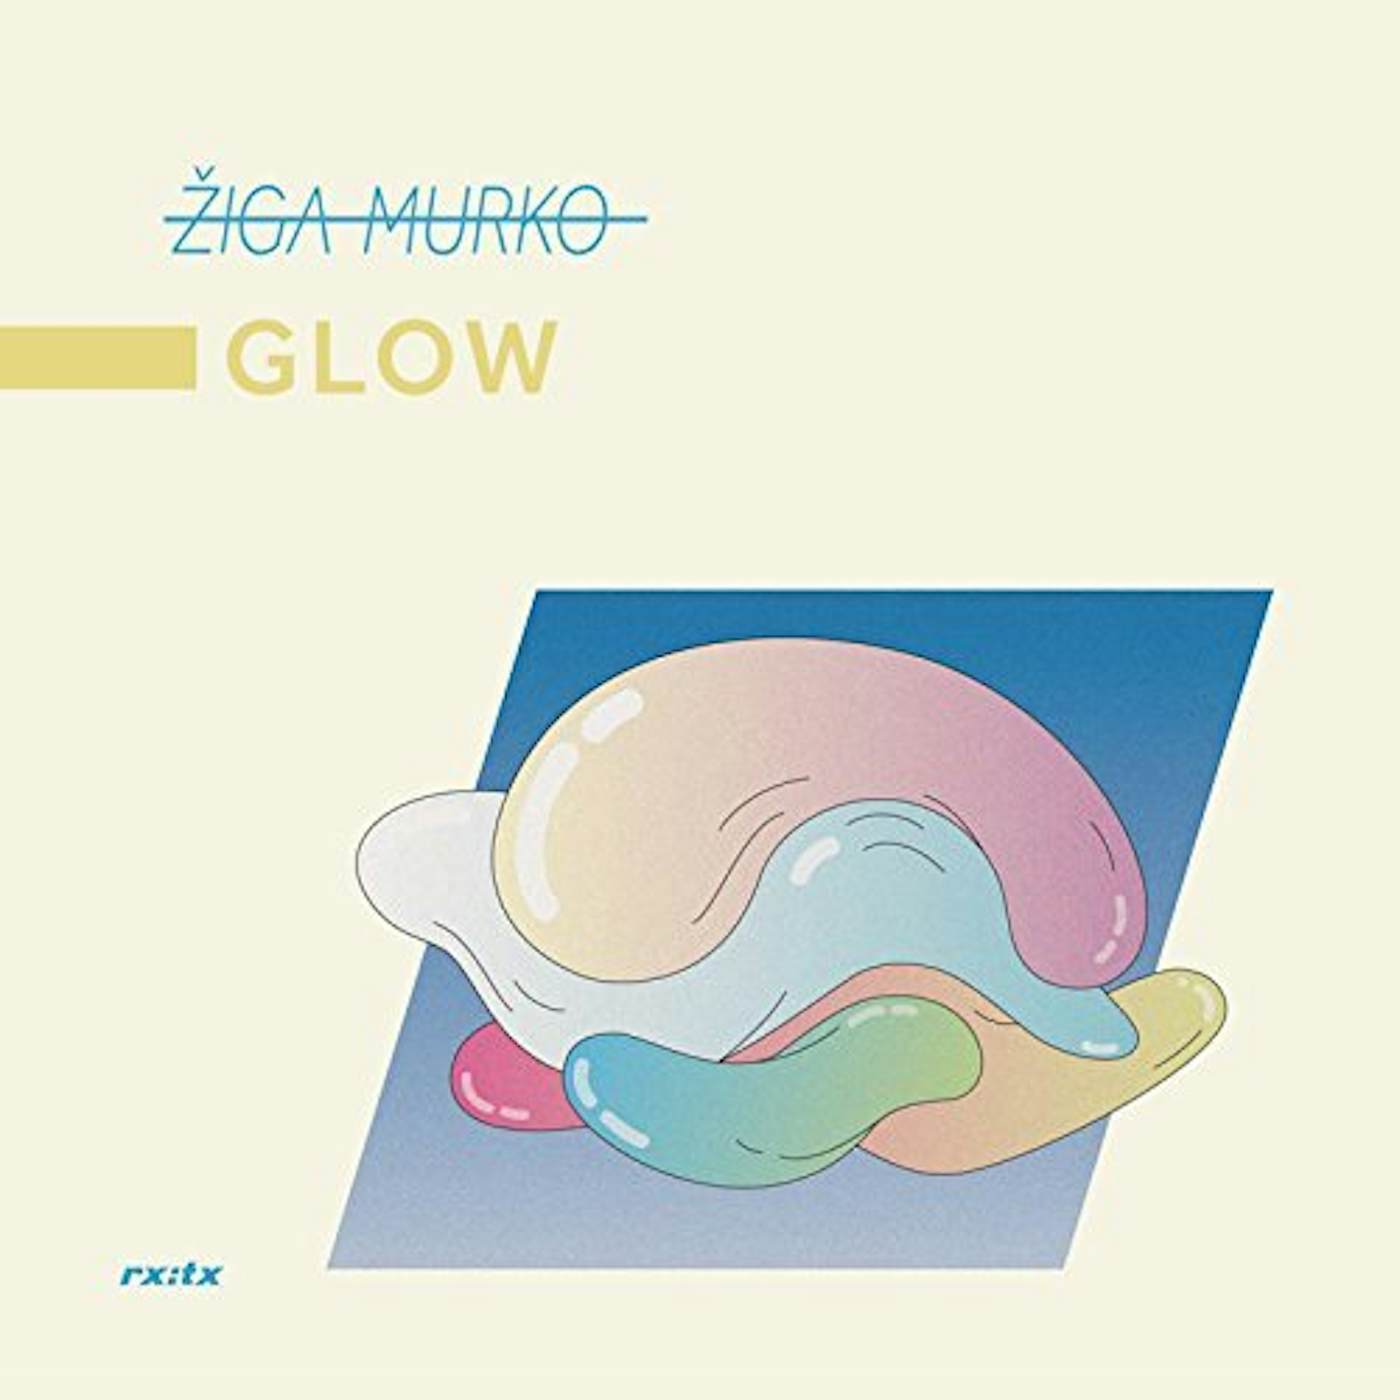 Žiga Murko Glow Vinyl Record